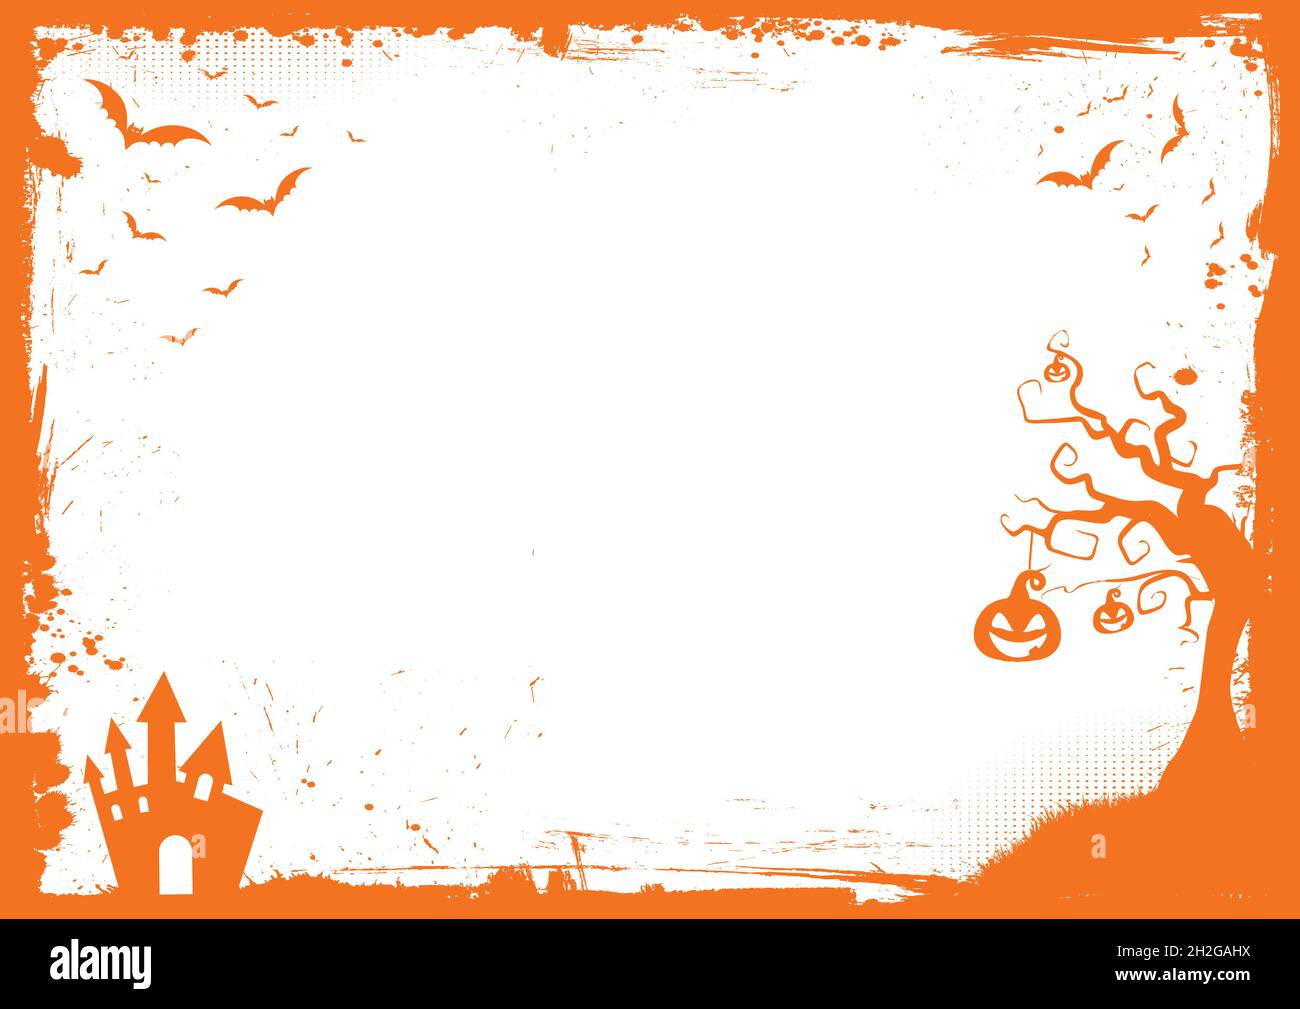 Horizontal Halloween orange element border and background template Stock Photo